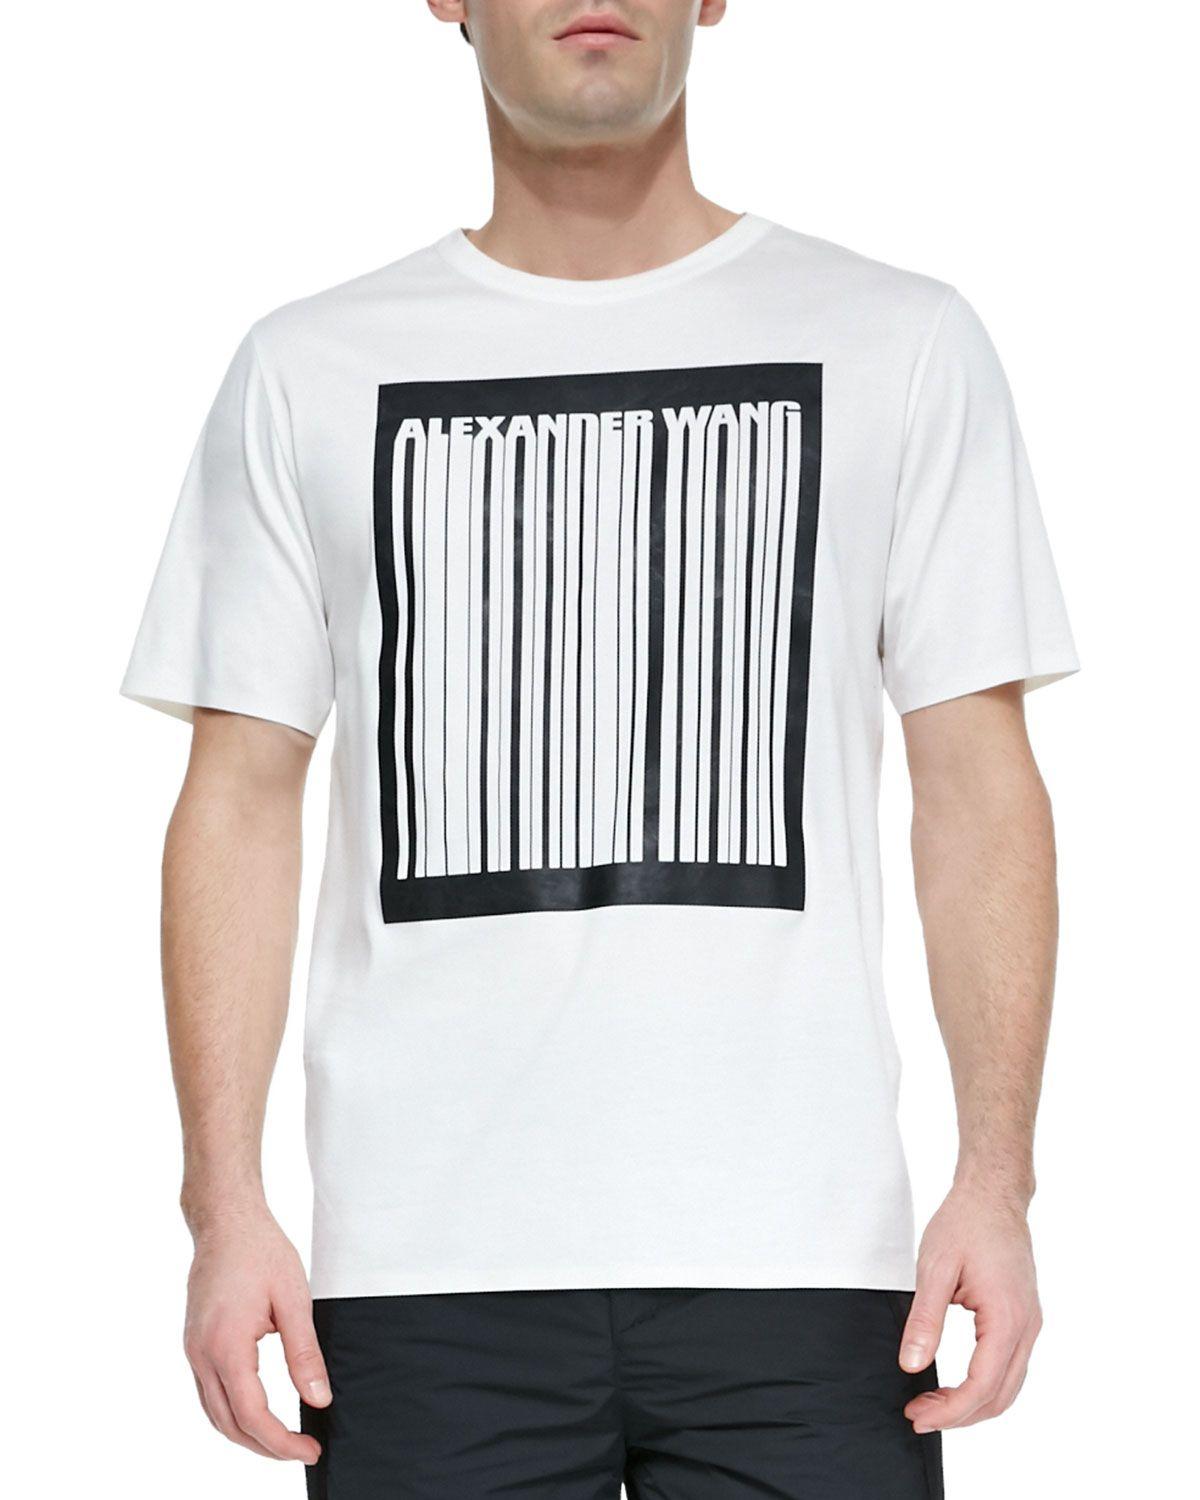 Alexander Wang Logo - Lyst - Alexander Wang Bonded Barcode Logo Tee Shirt in White for Men